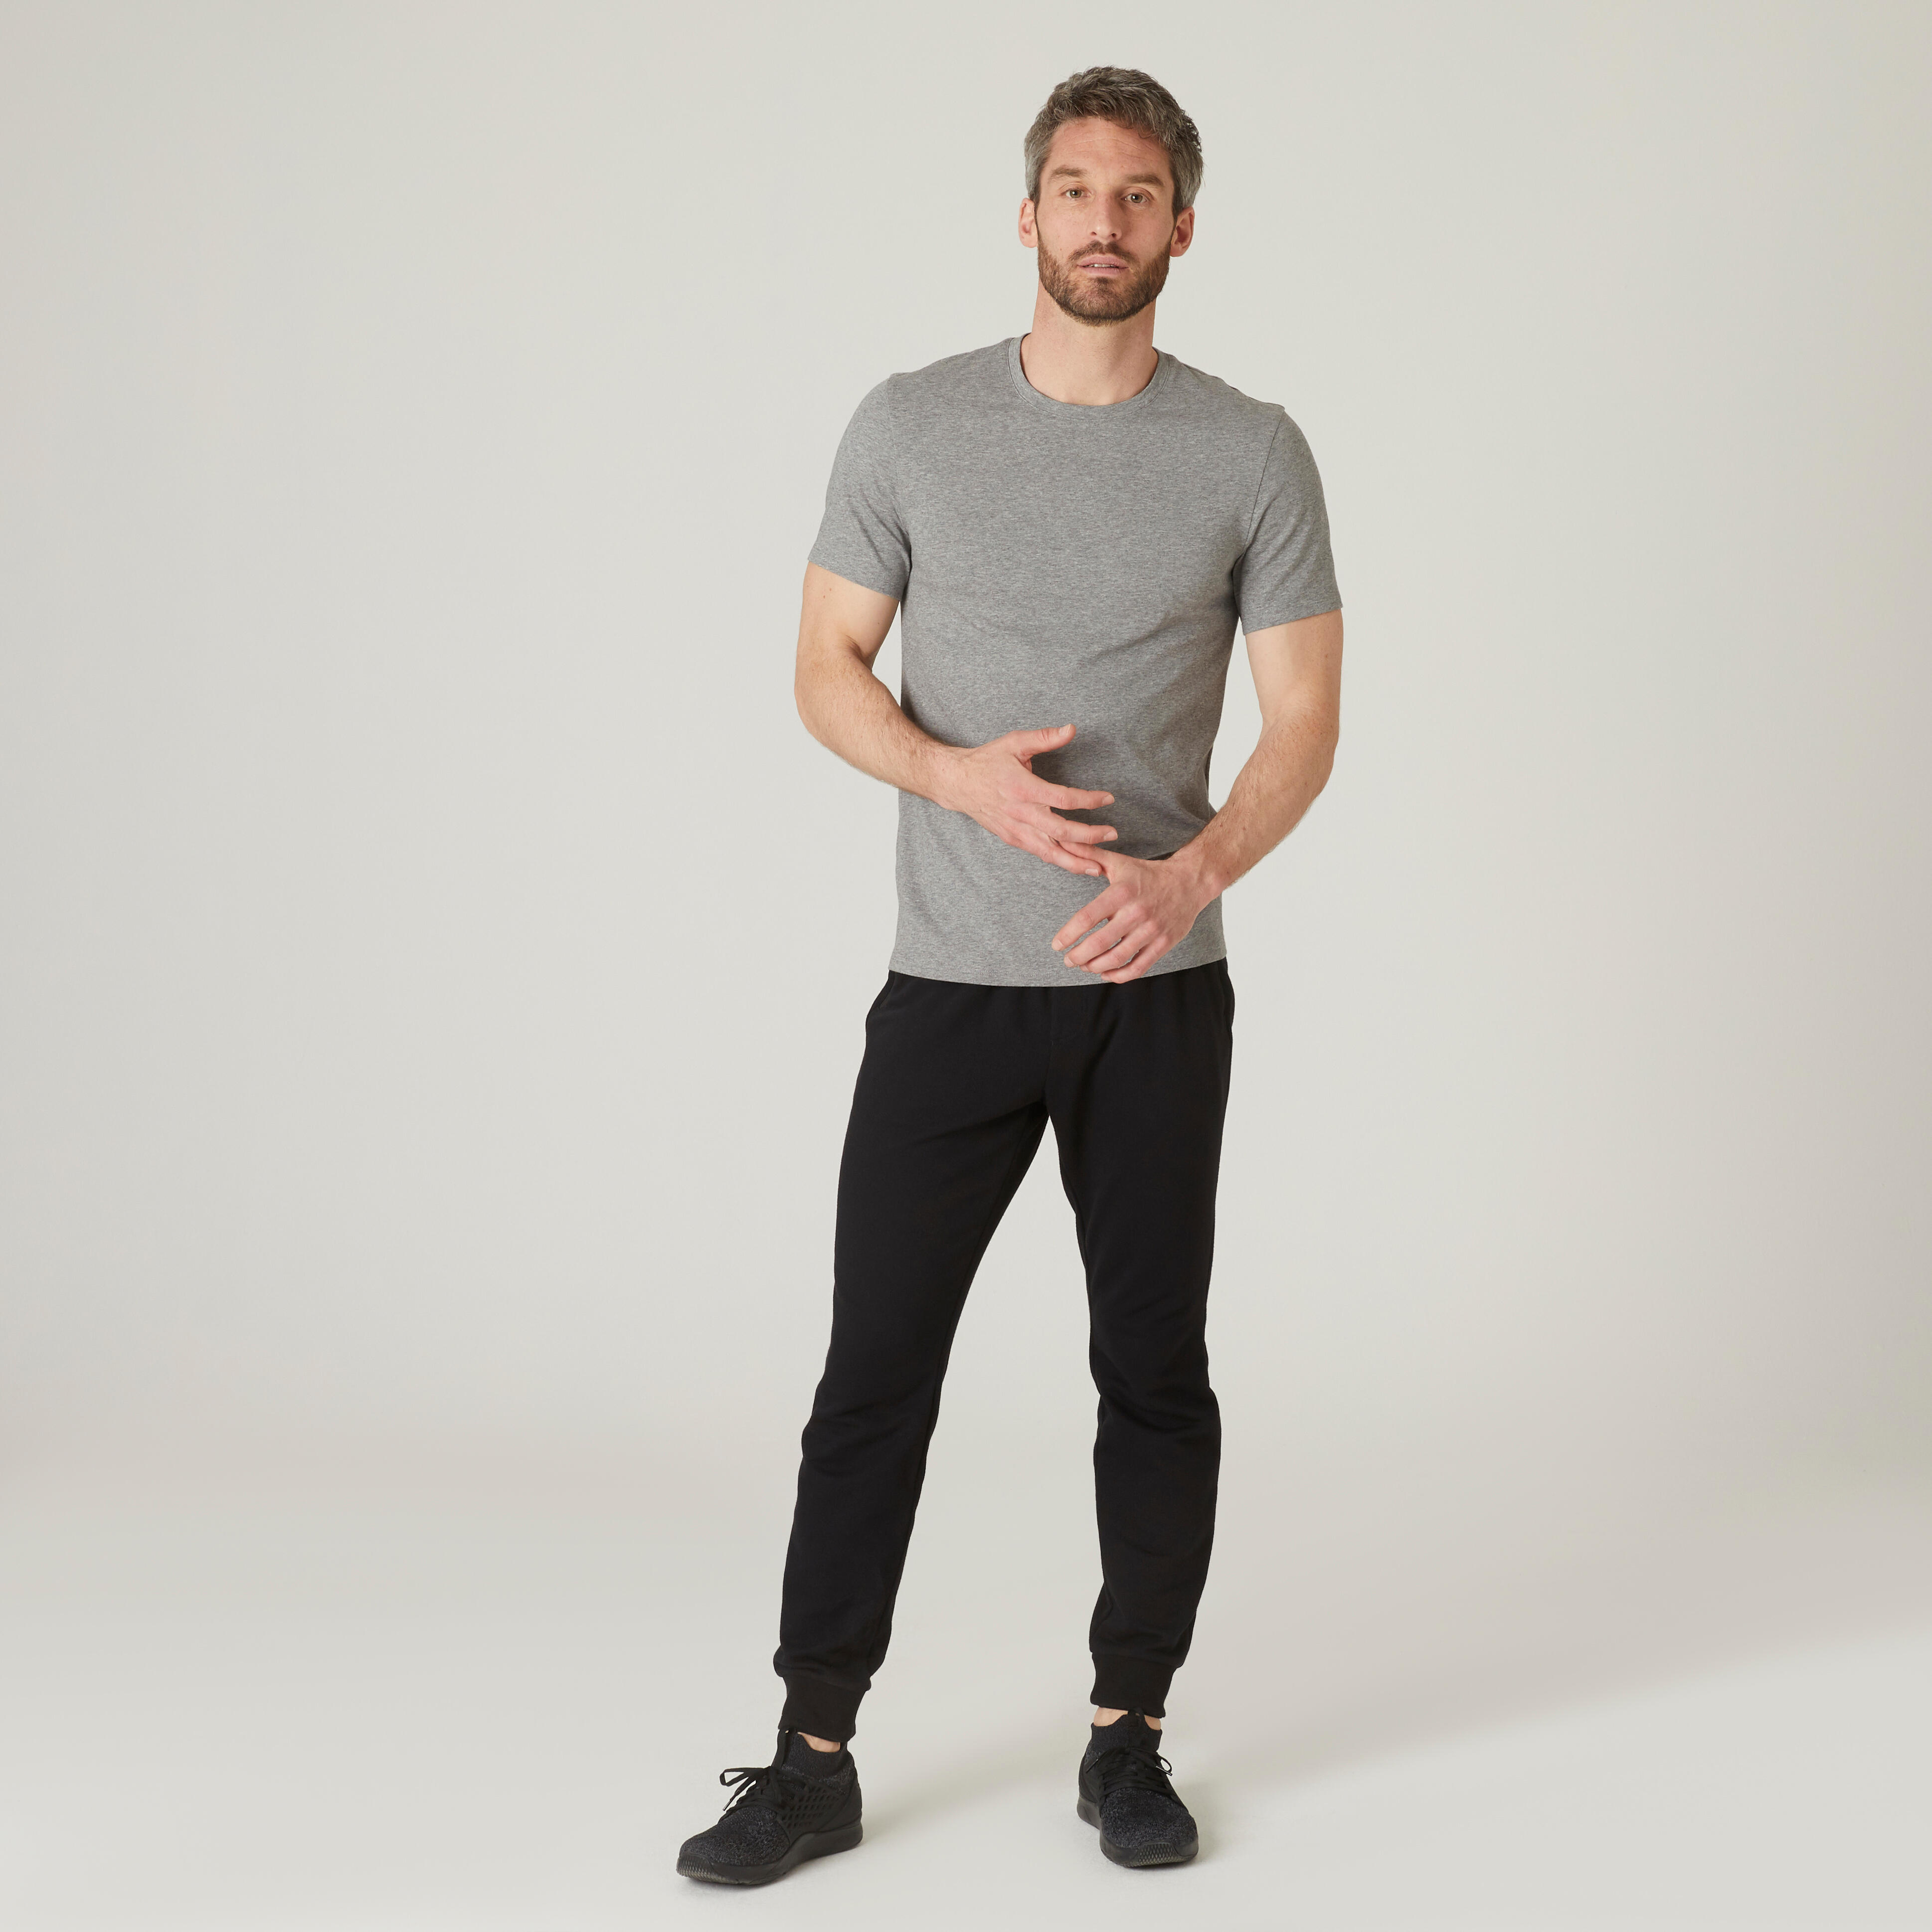 T-shirt Slim fitness Homme - 500 gris